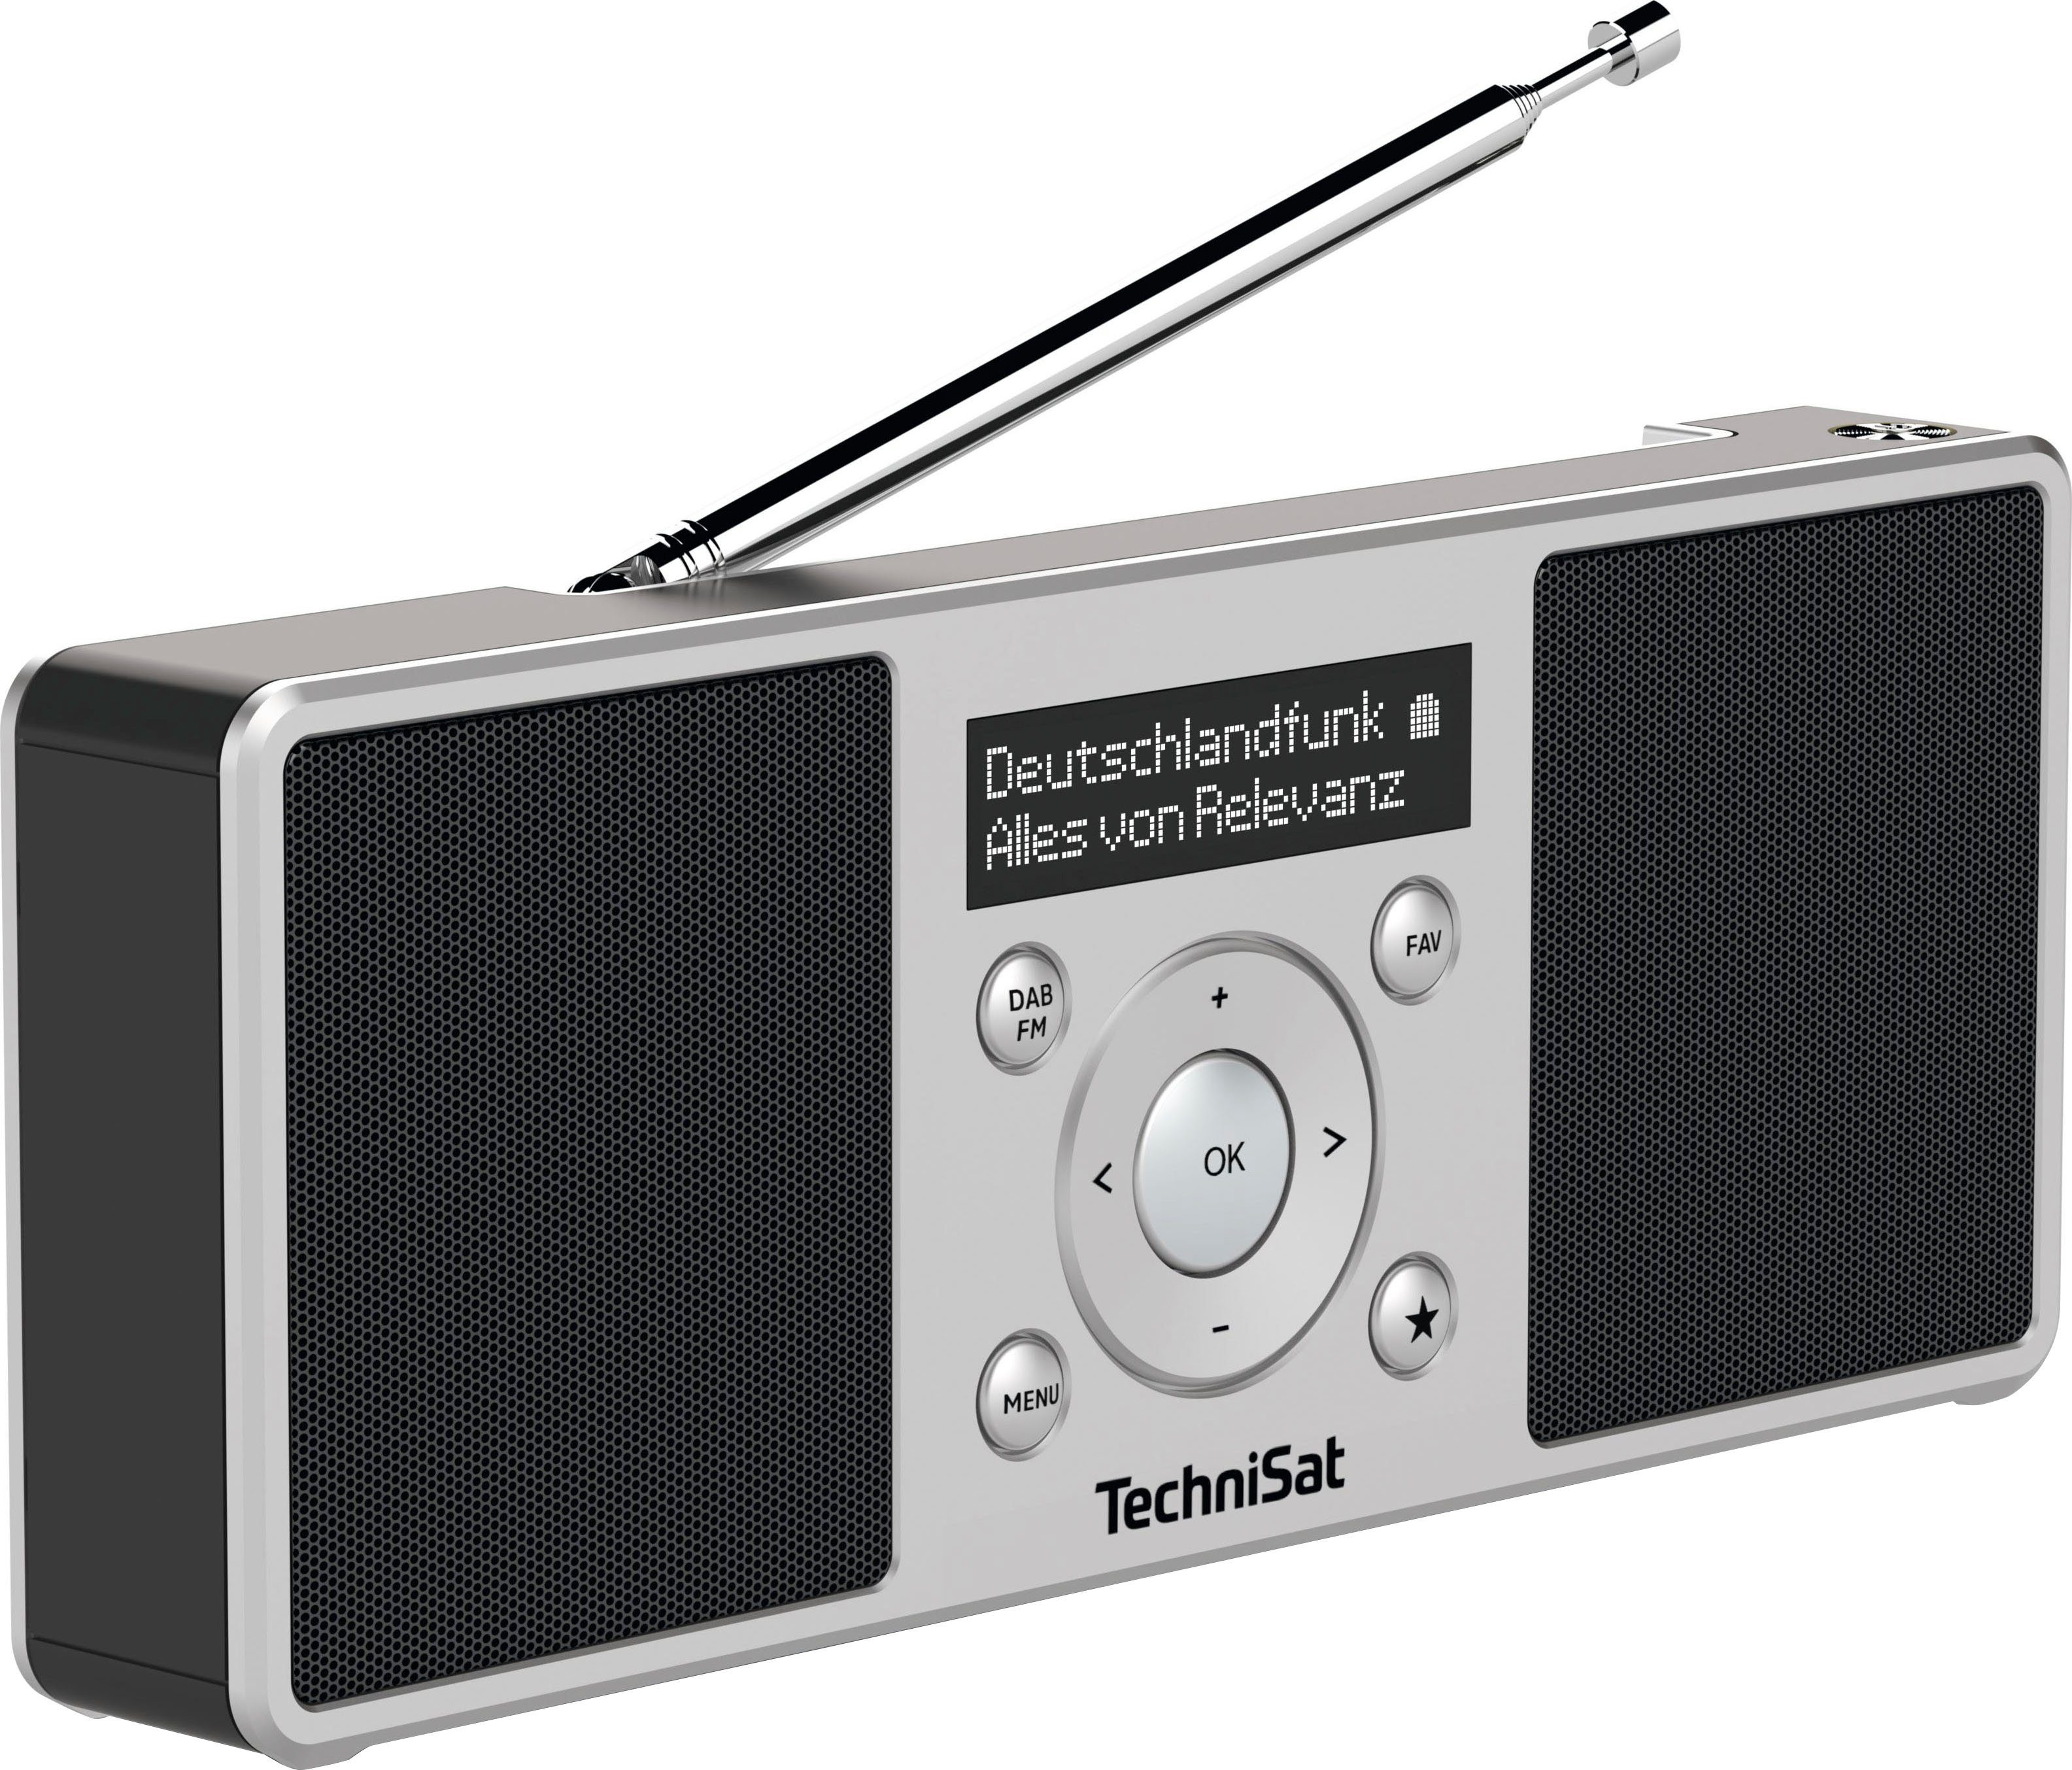 S TechniSat USB, UKW (Digitalradio Germany), (DAB), 1x in RDS, mit W, DIGITRADIO Made Digitalradio (DAB) 1 2 Kopfhöreranschluss